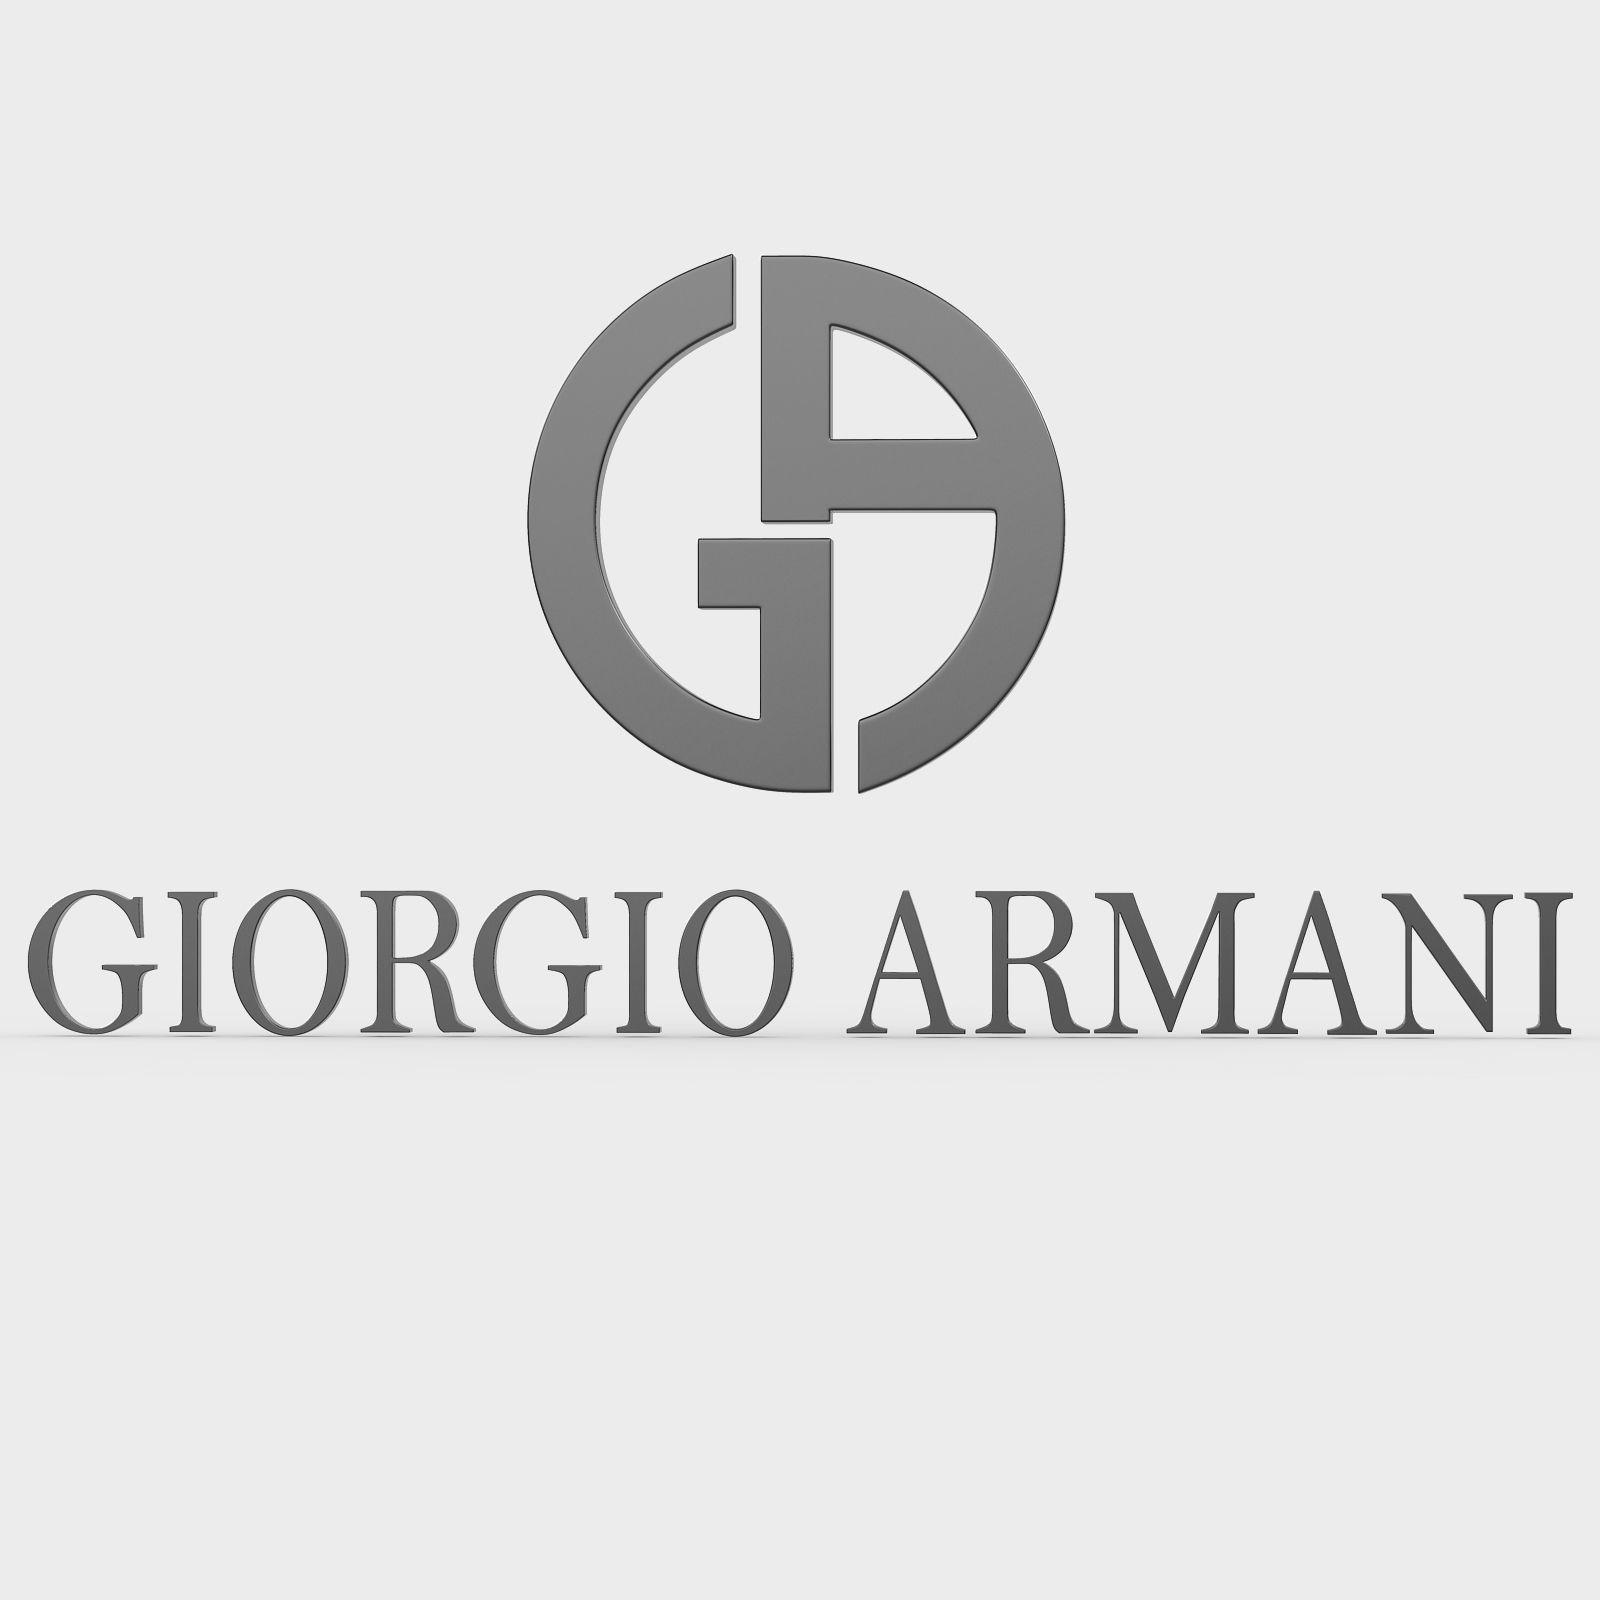 Giorgio Armani Logo - LogoDix